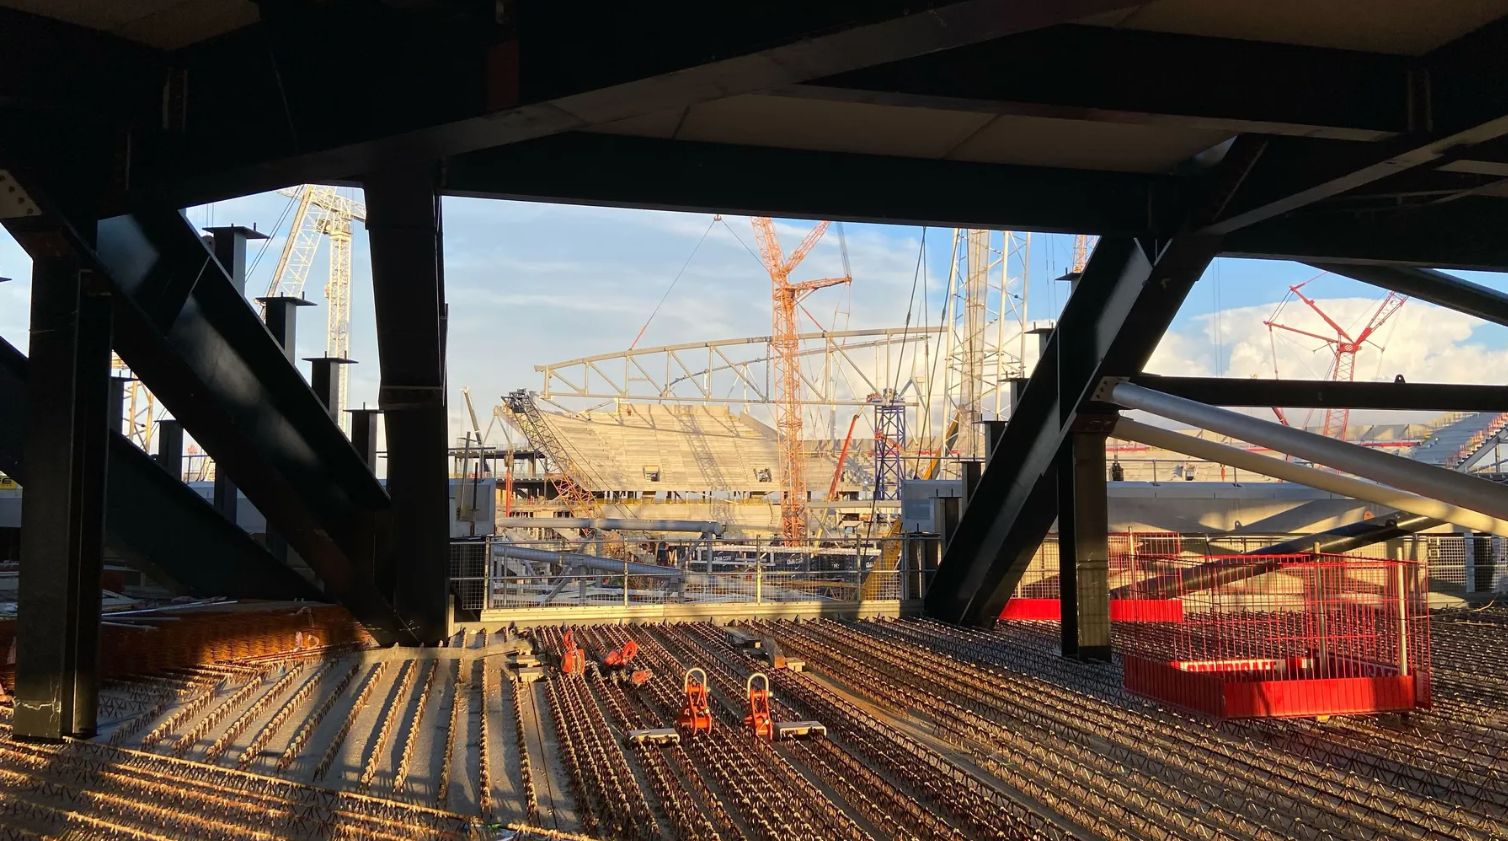 Everton's new Bramley-Moore Dock stadium takes shape (Image courtesy of Everton FC)